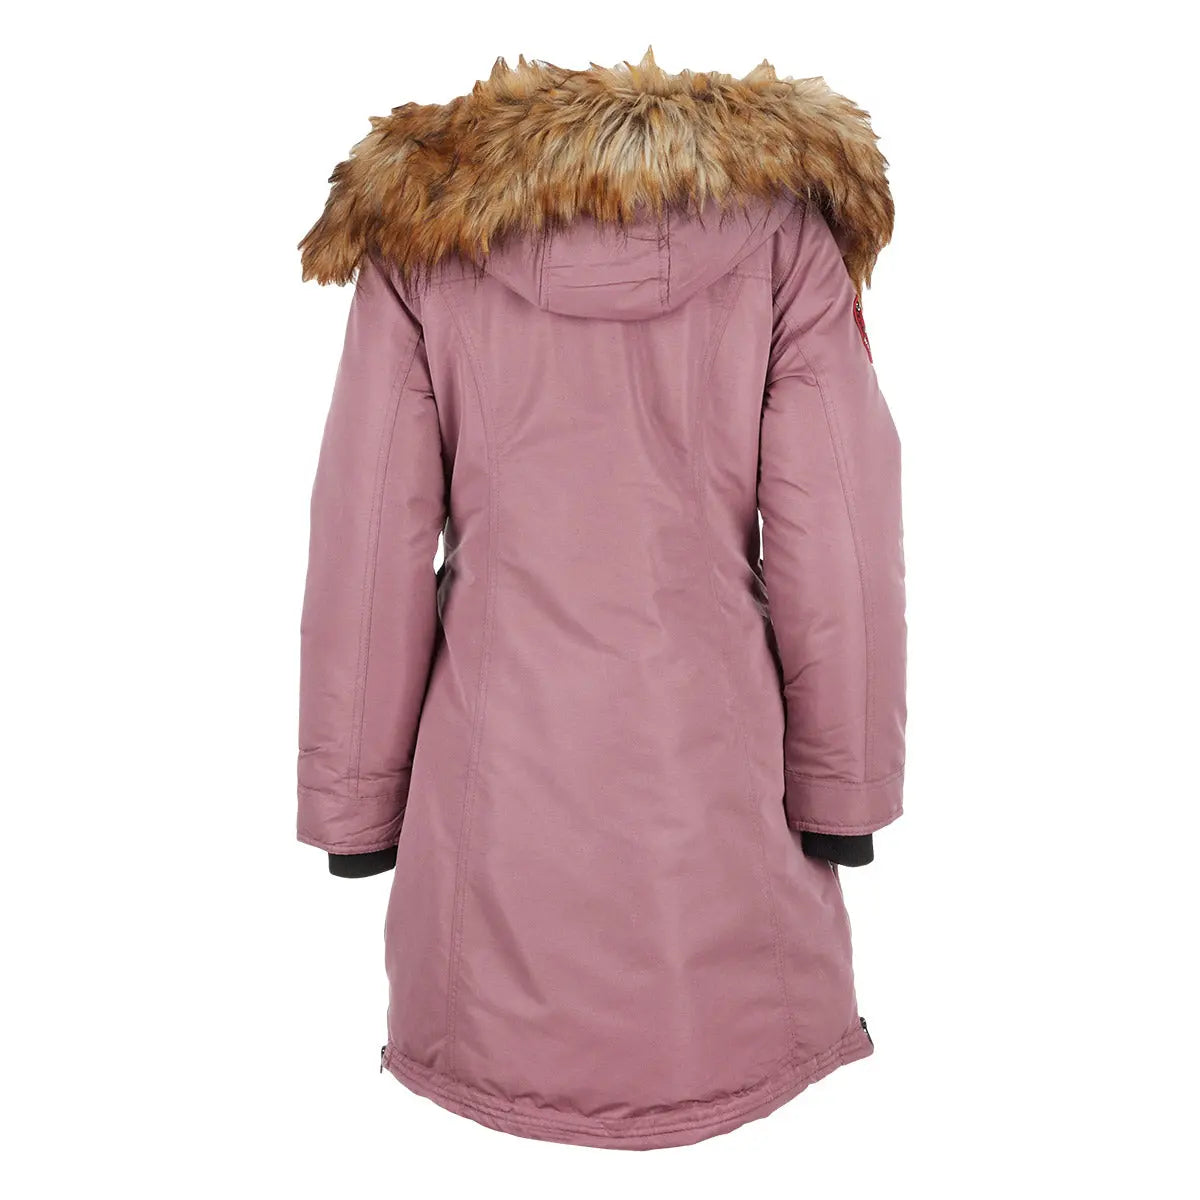  CANADA WEATHER GEAR Women's Winter Coat - Stadium Parka Jacket,  Fur Trim Hood (S-3XL), Size Small, Pink Haze : Clothing, Shoes & Jewelry